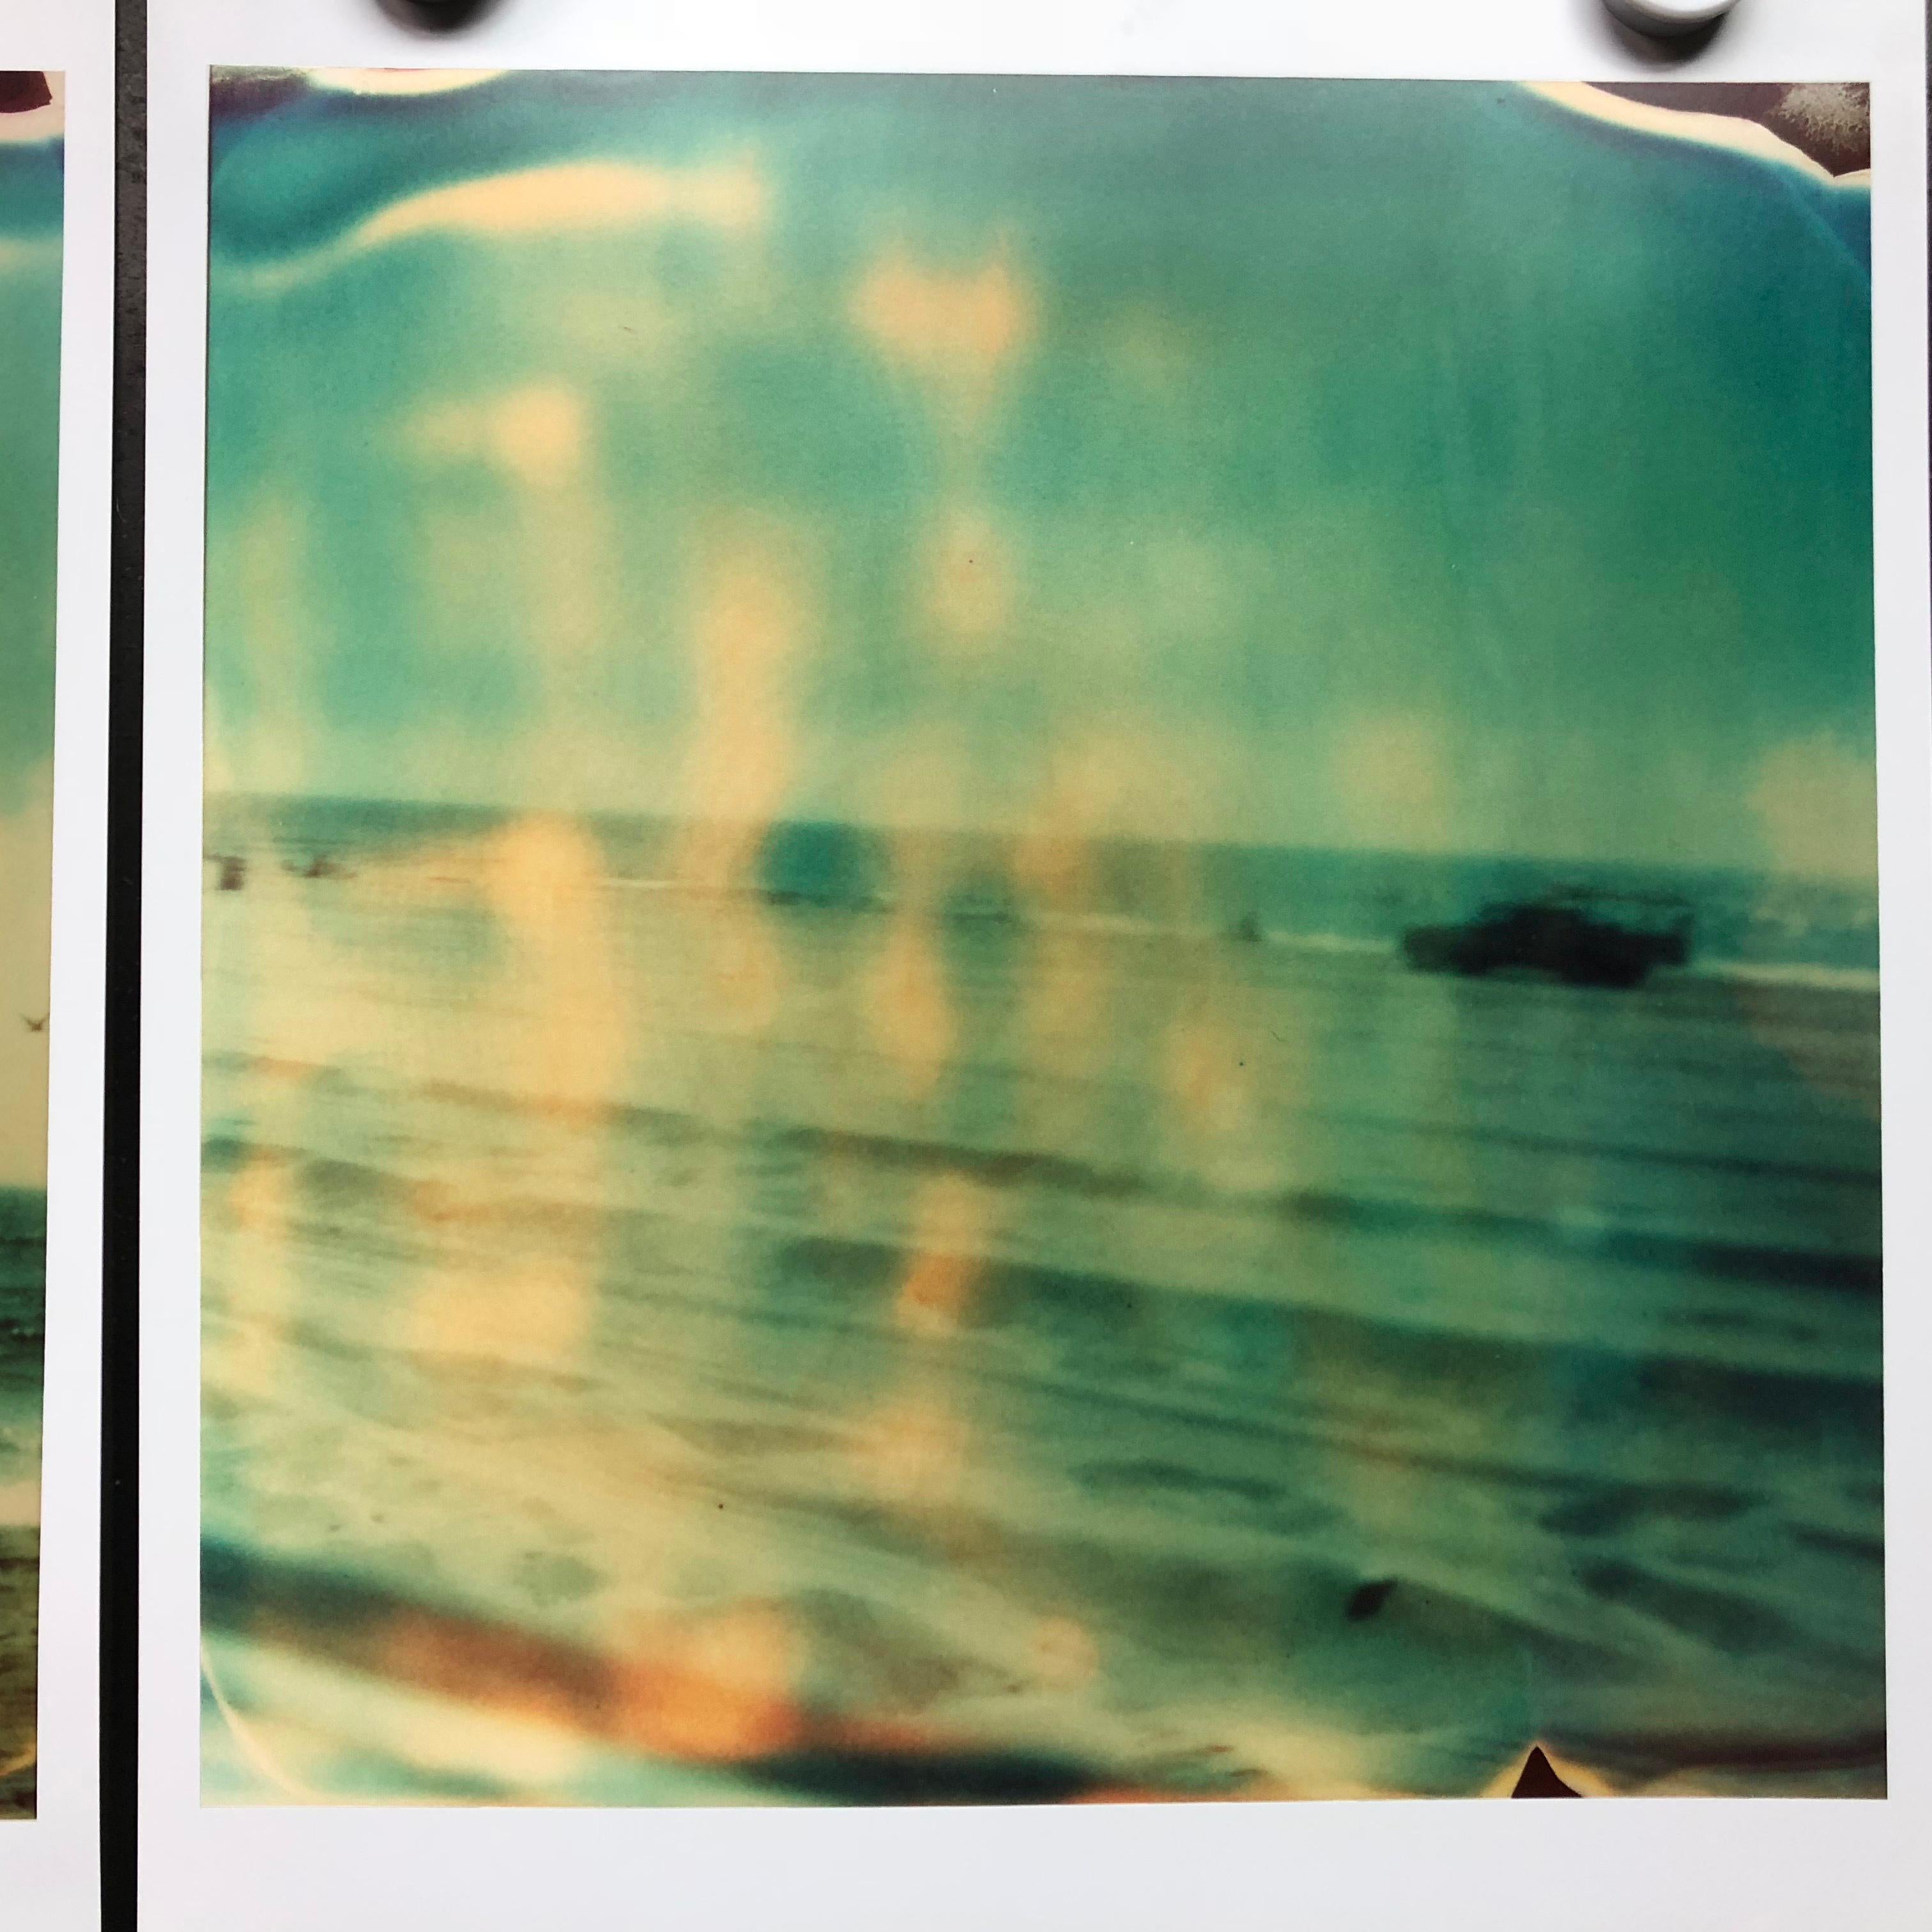 Lifeguard (Malibu) - Contemporary, Landscape, expired, Polaroid, analog - Green Landscape Photograph by Stefanie Schneider